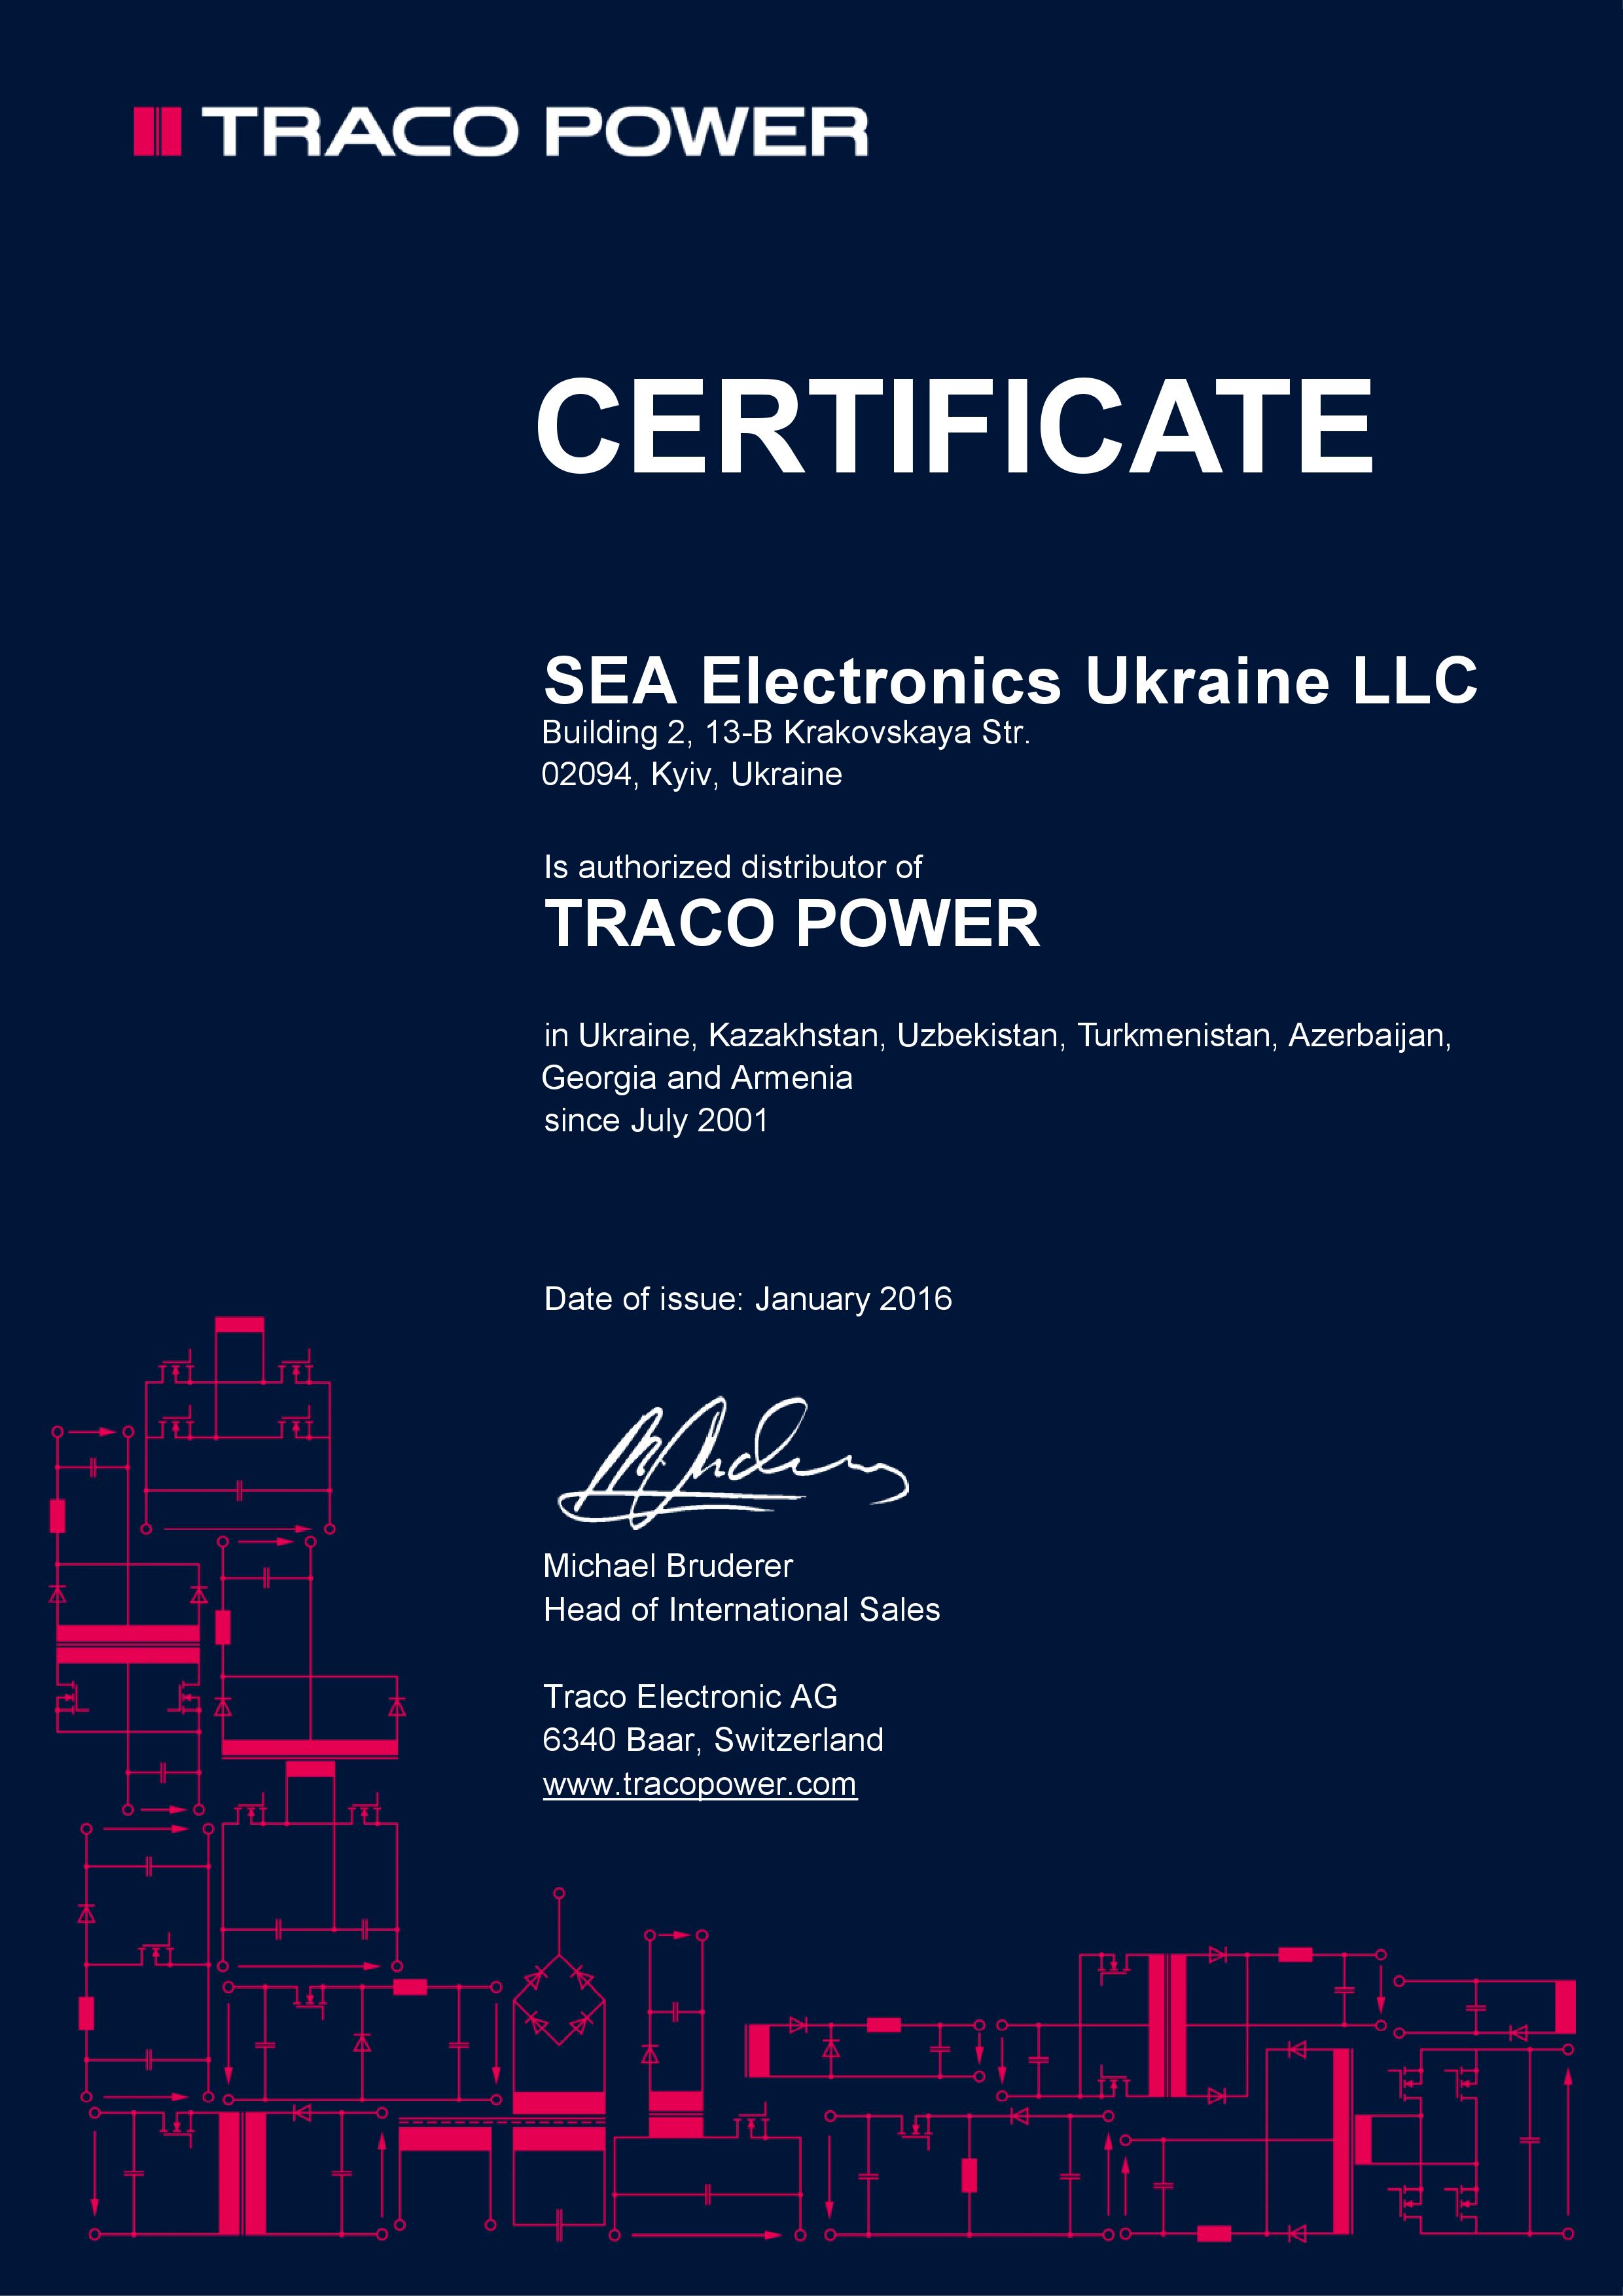 Сертификат авторизованного дистрибьютора traco power в Украине.